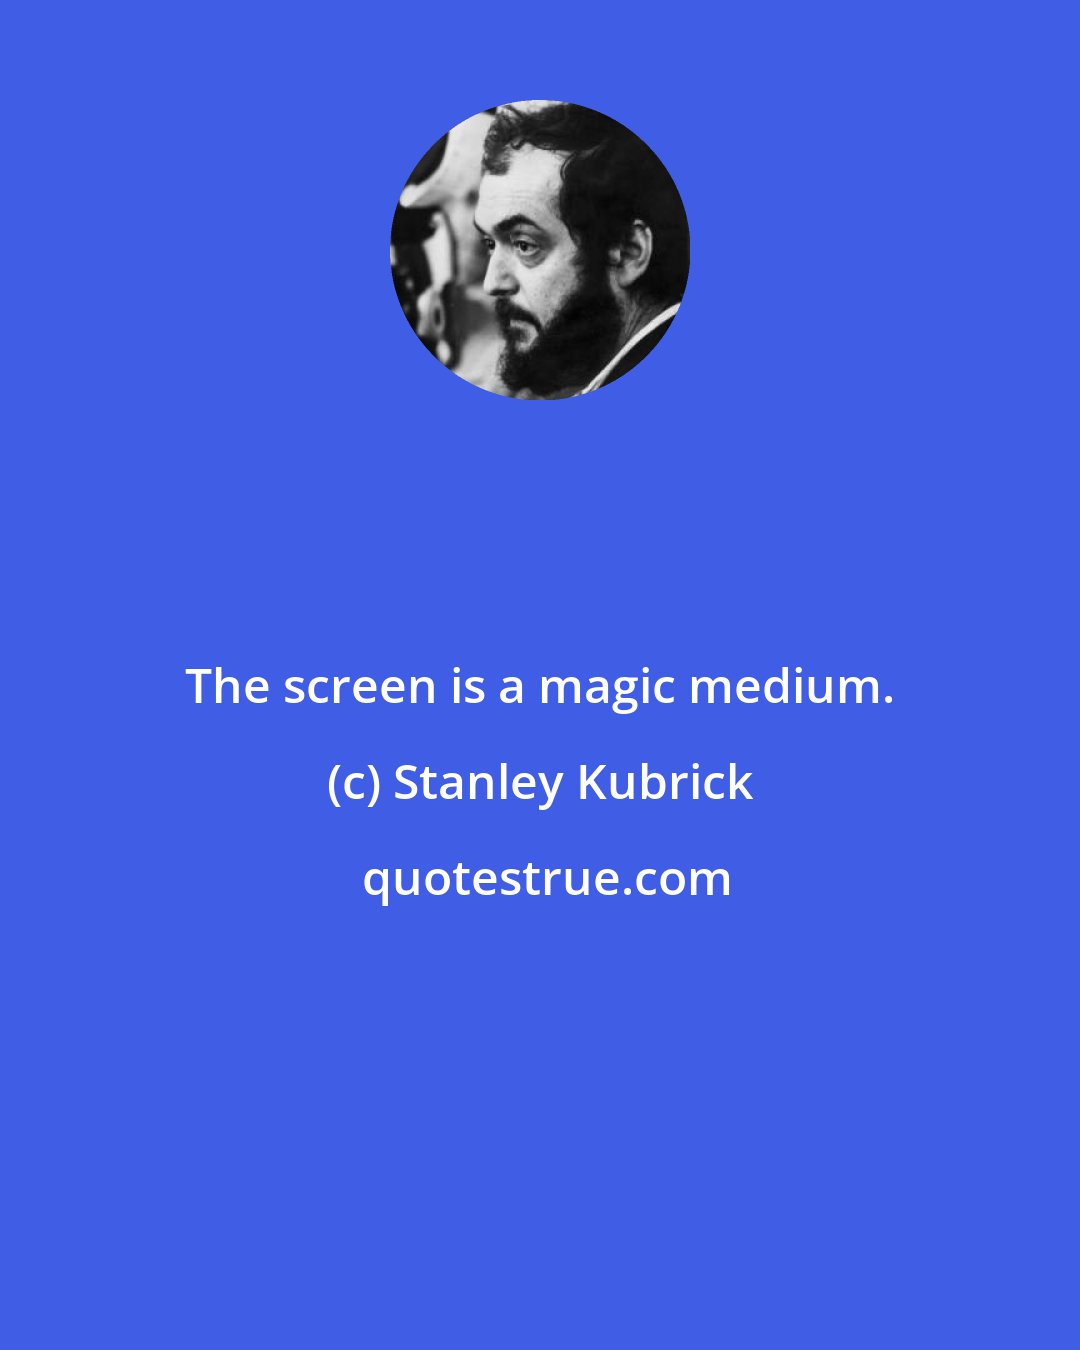 Stanley Kubrick: The screen is a magic medium.